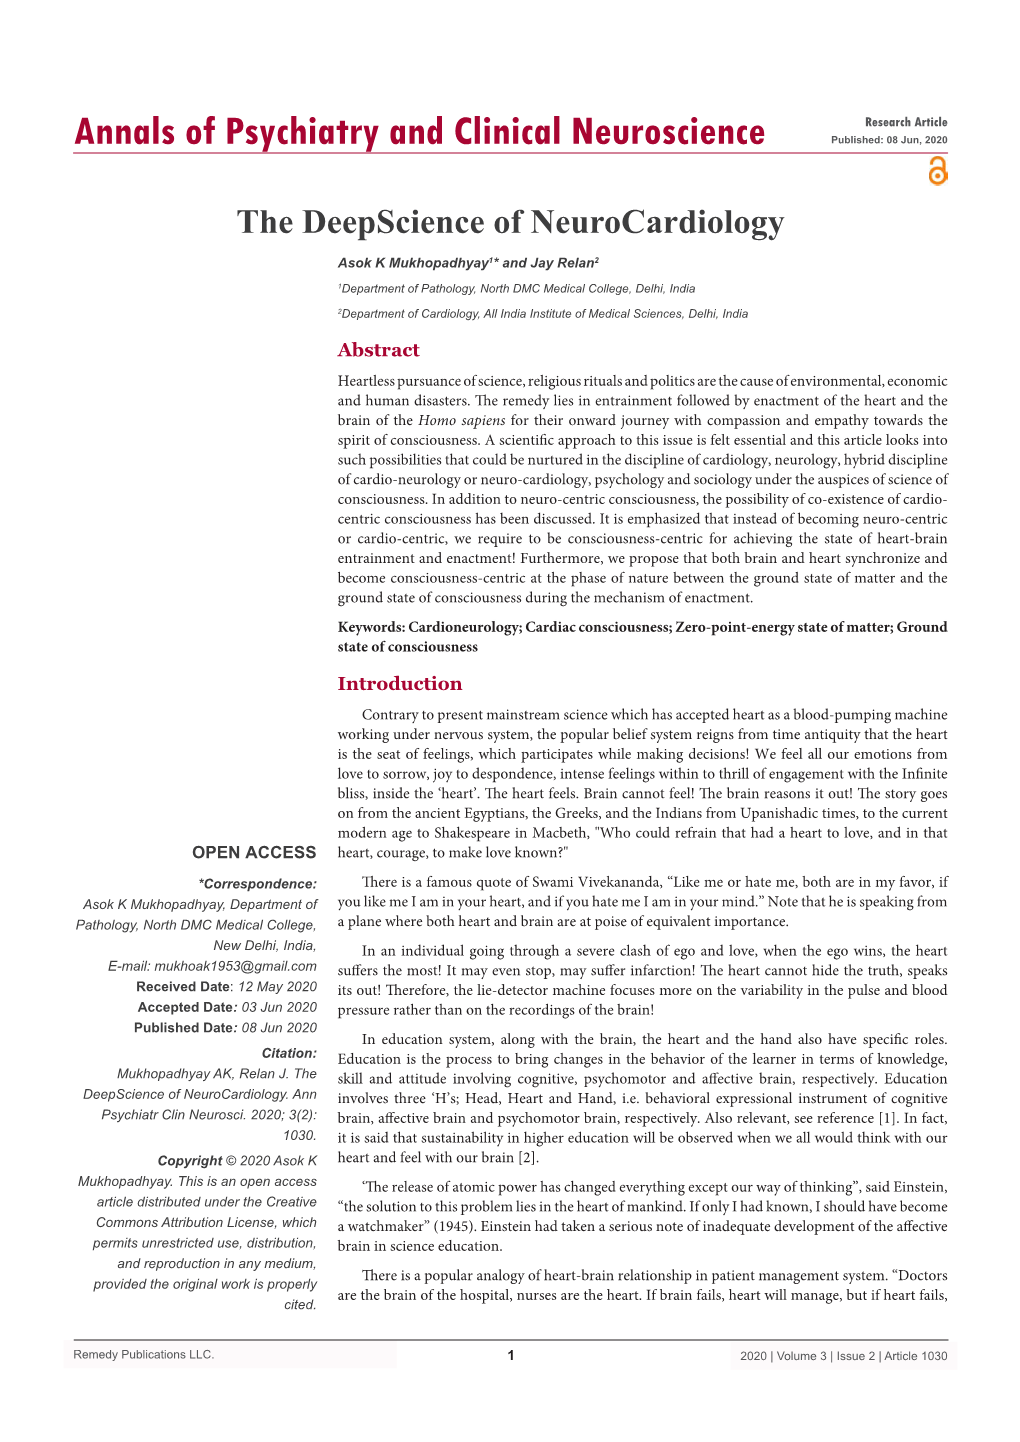 The Deepscience of Neurocardiology